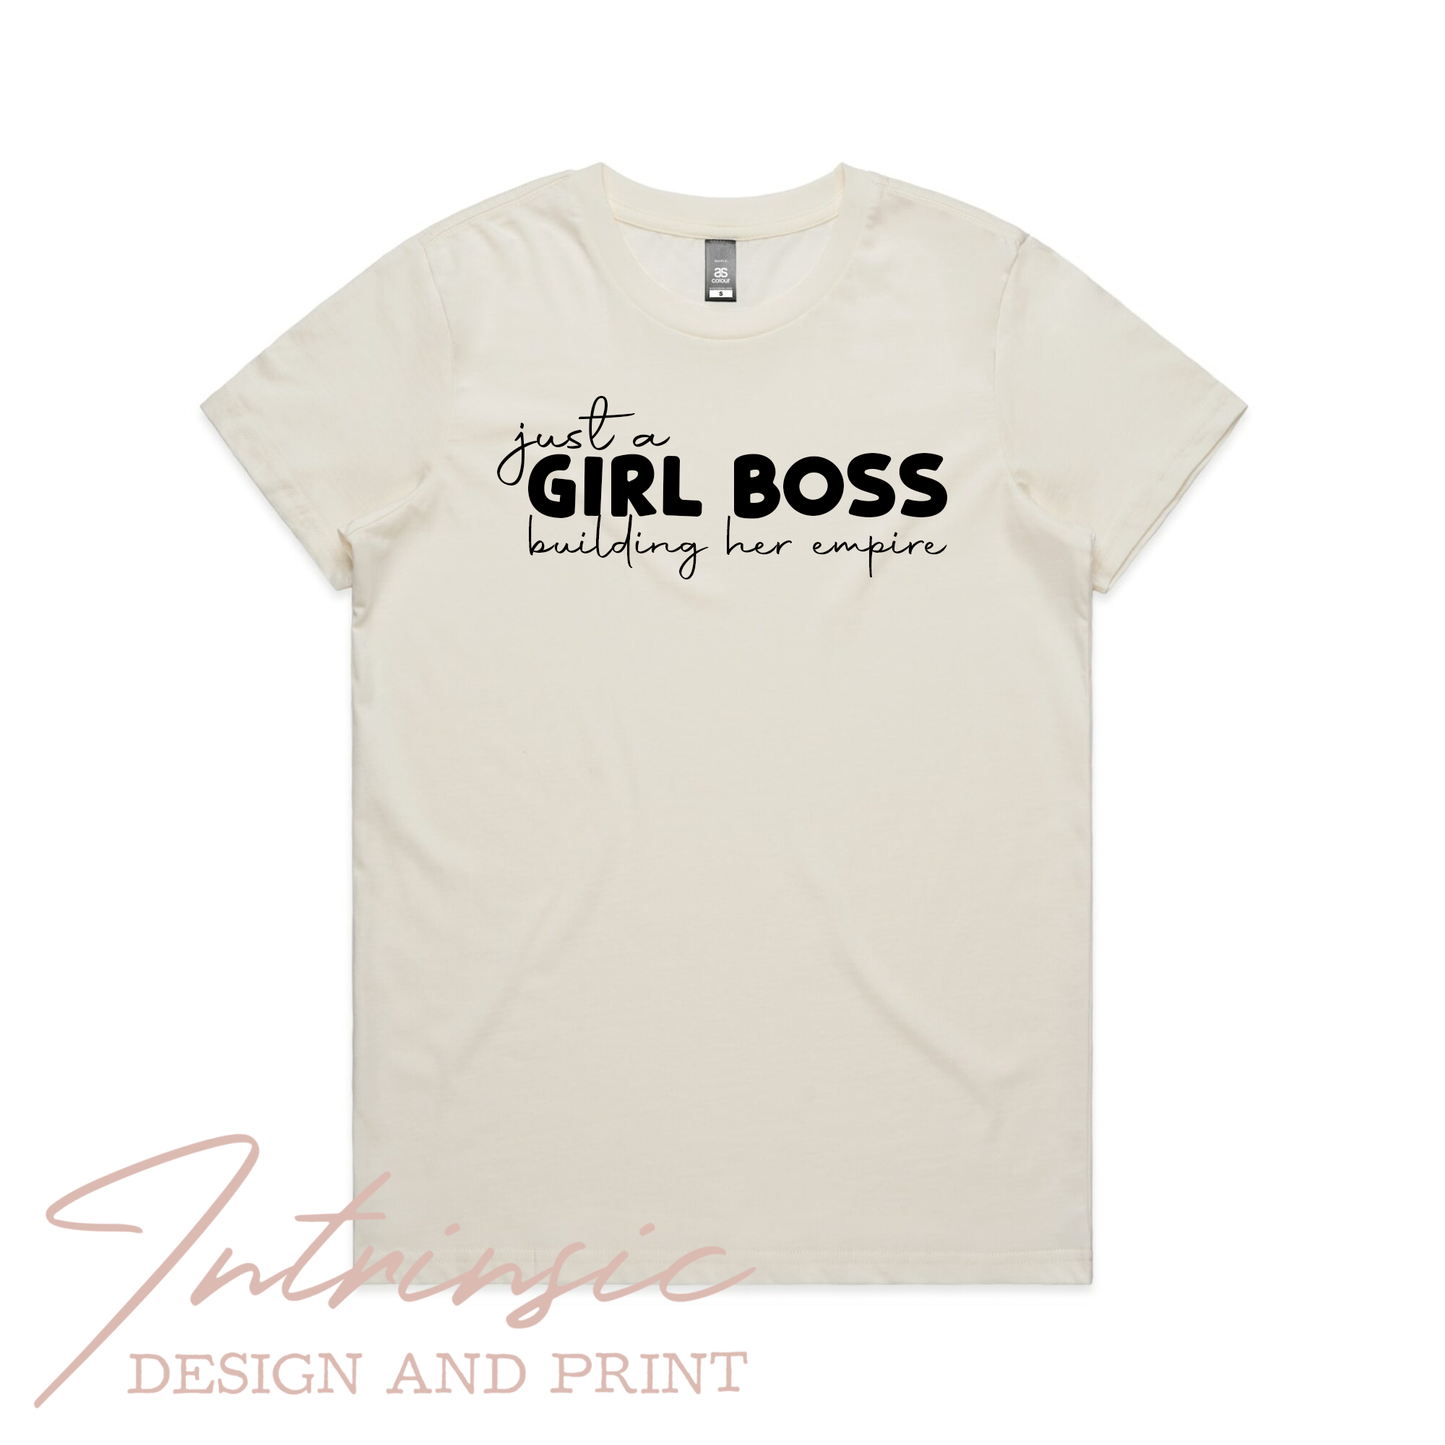 Girl boss empire